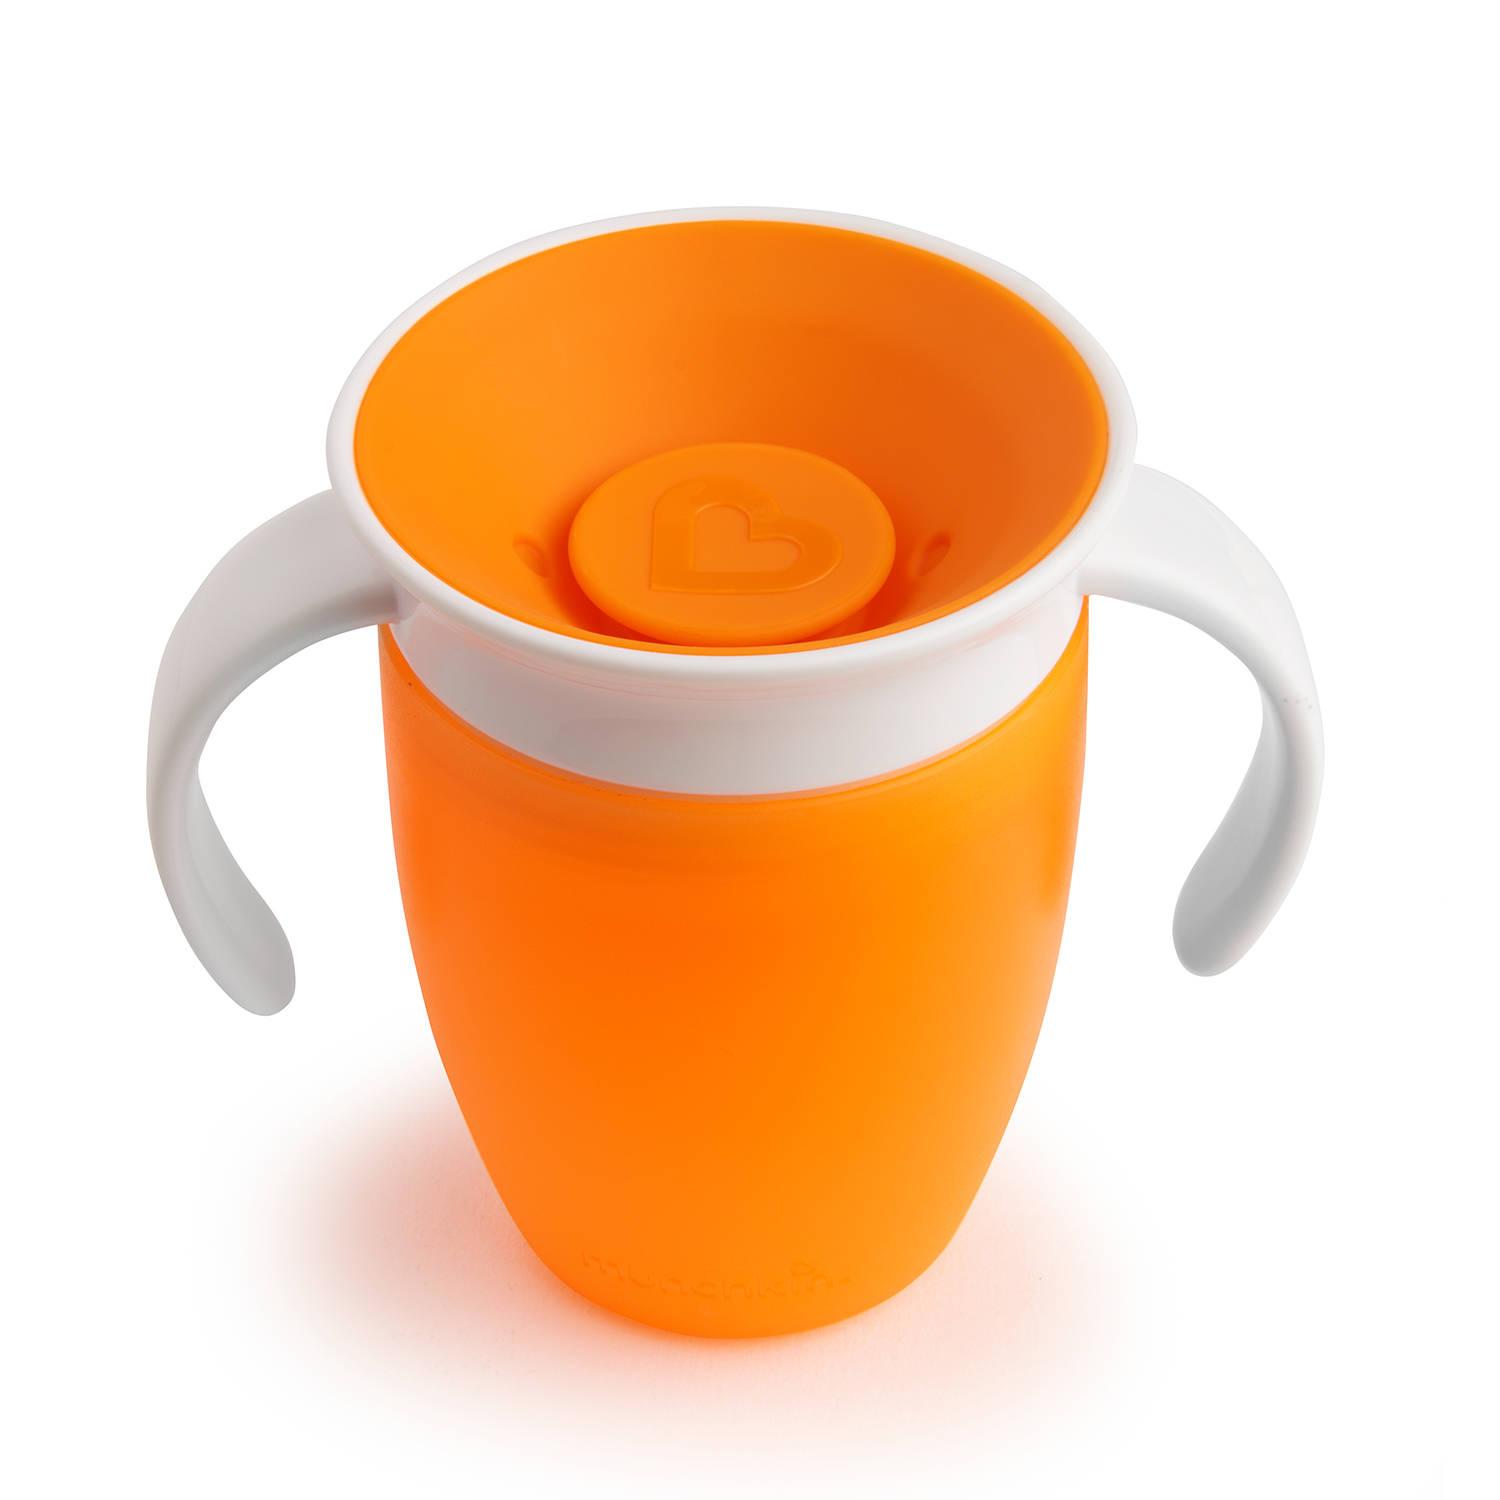 Gedrag Samengroeiing Onderzoek Munchkin 360° Miracle trainer cup oranje | Blokker